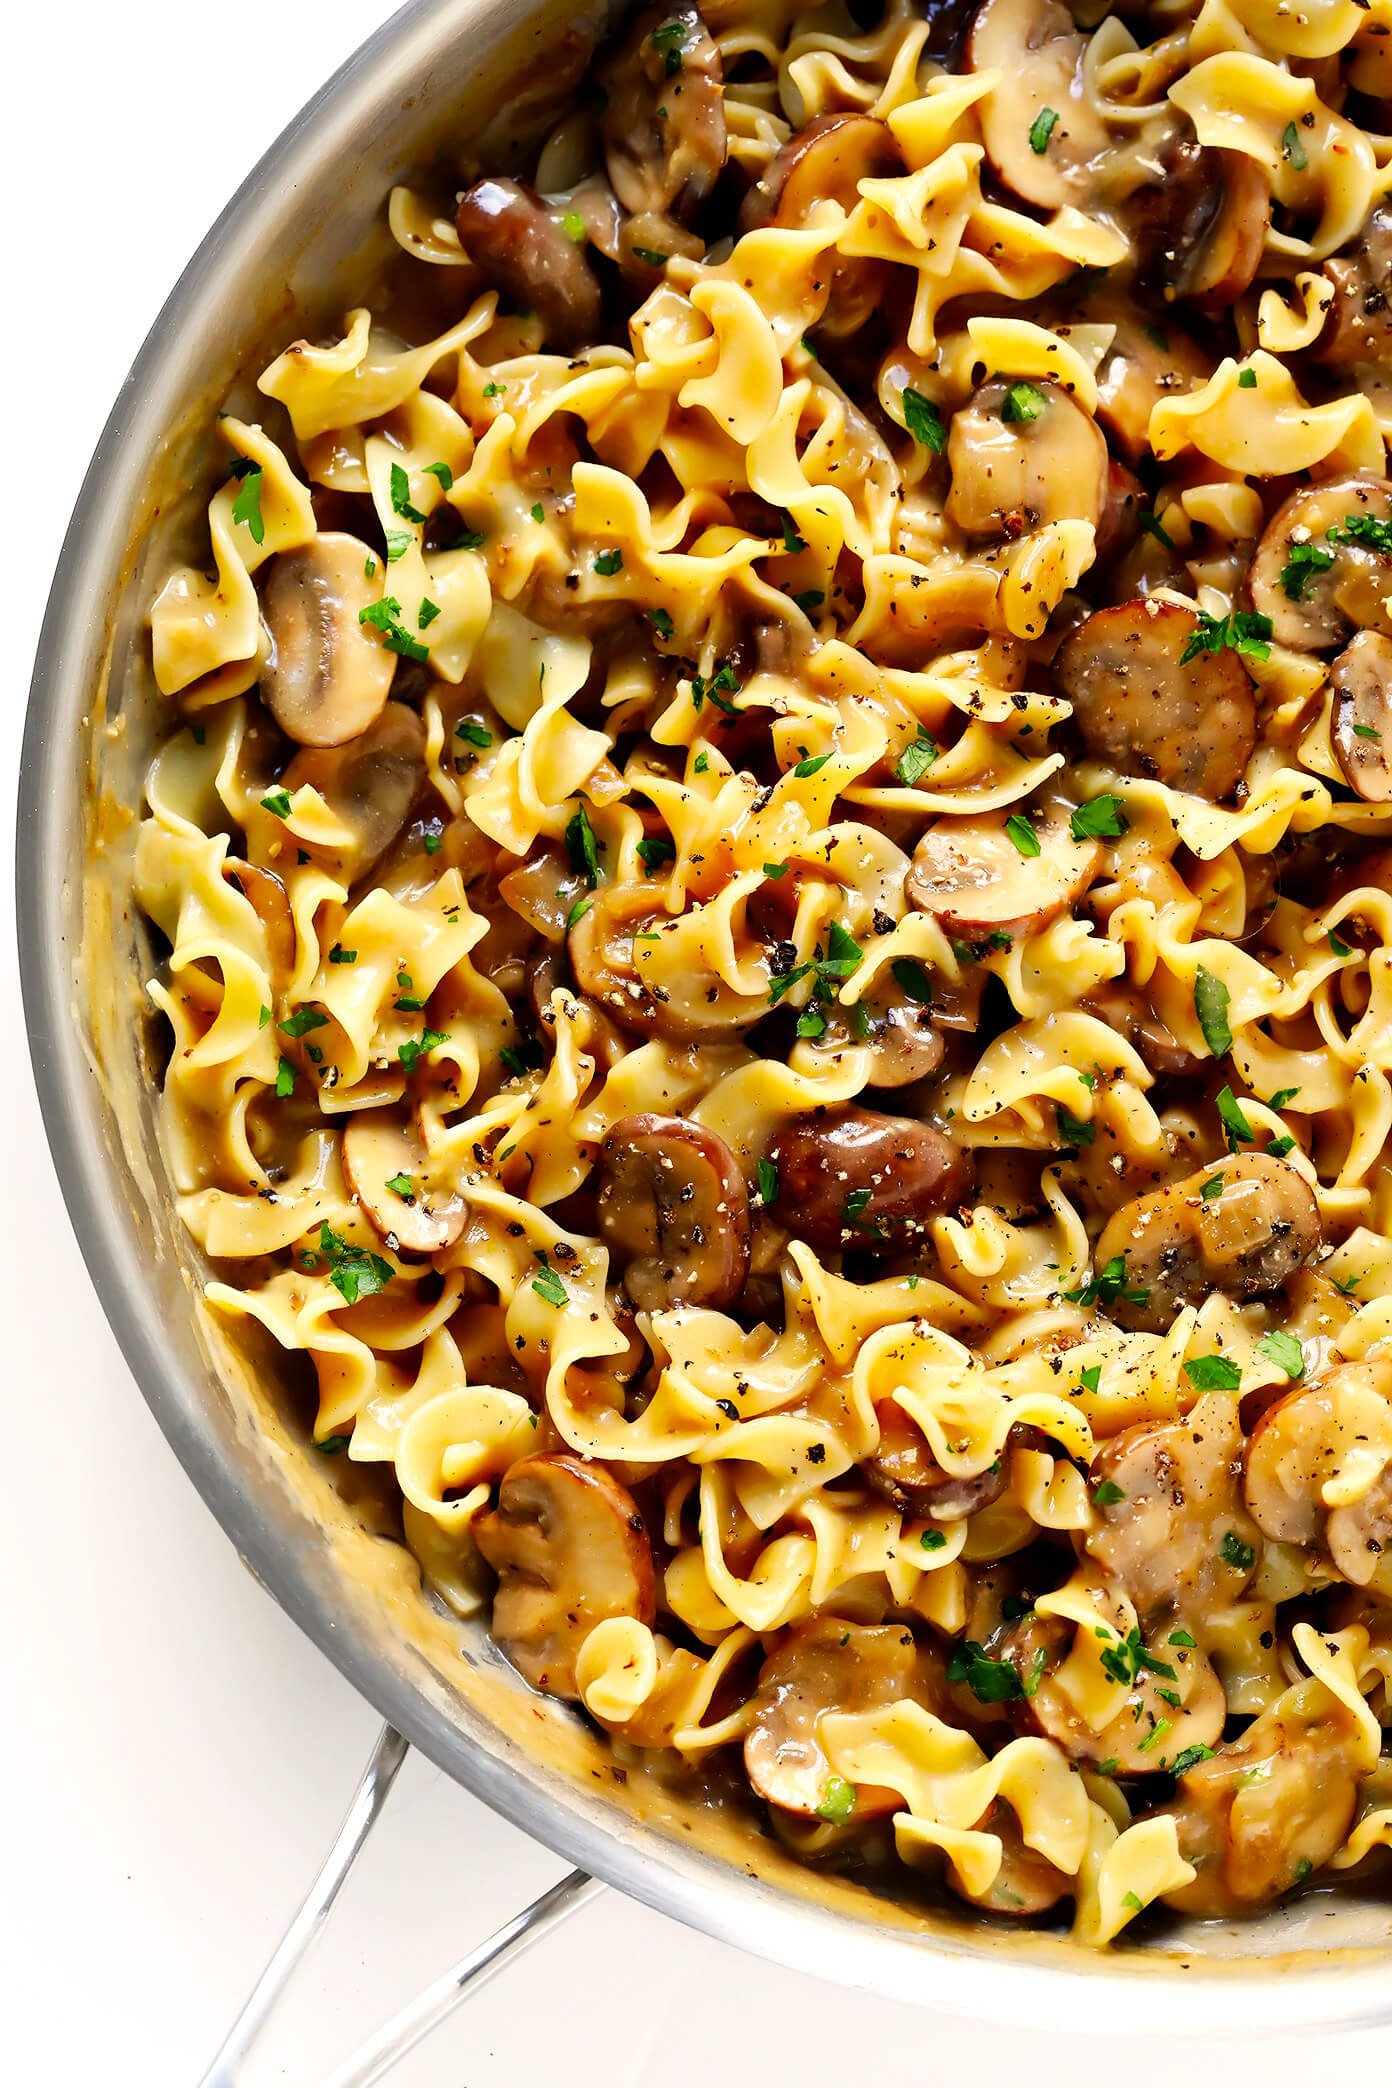 Amazing Mushroom Stroganoff Recipe | 20 Vegetarian Dinner Ideas